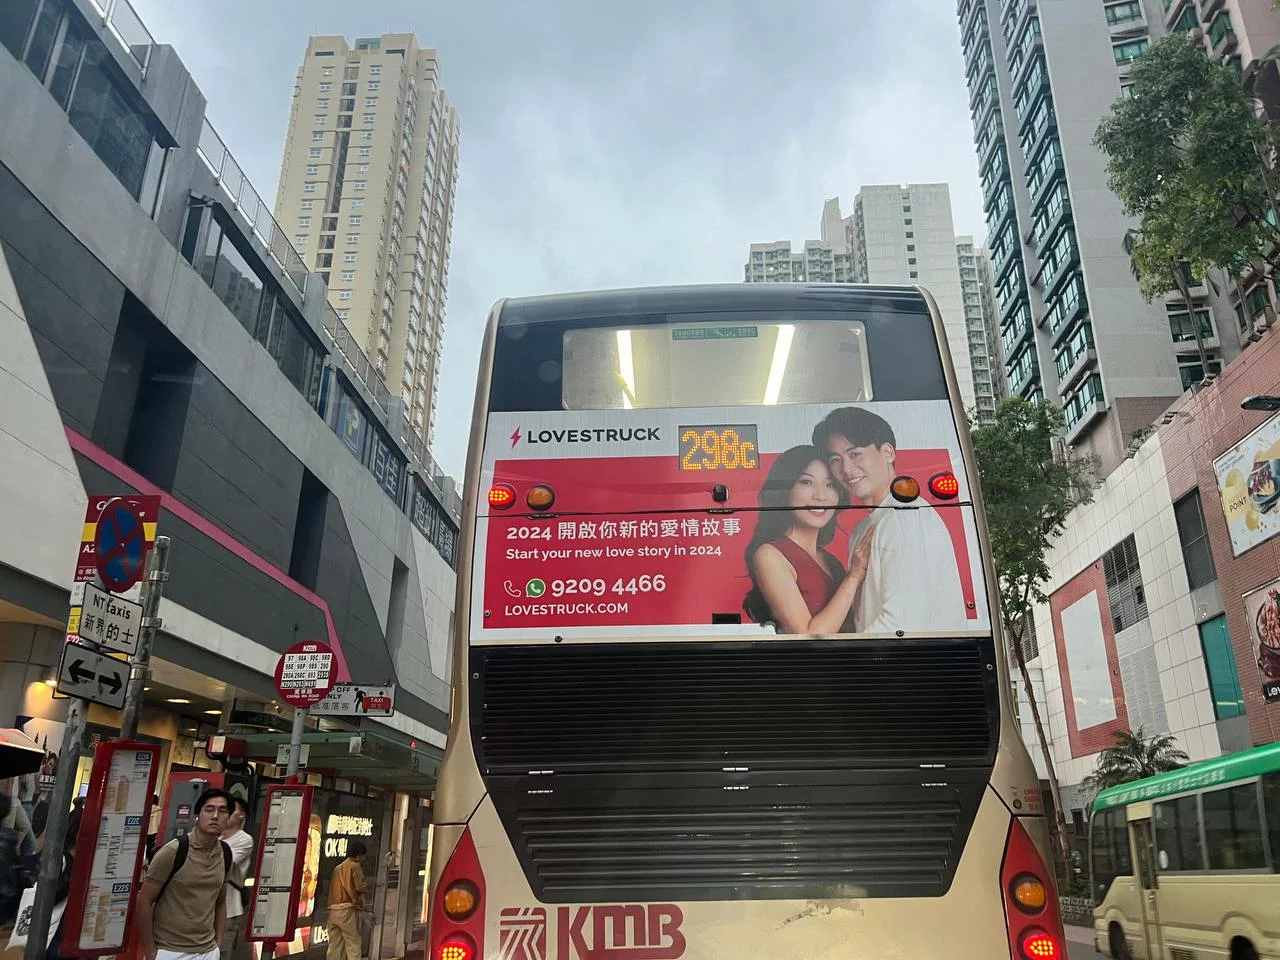 A bus in Hong Kong